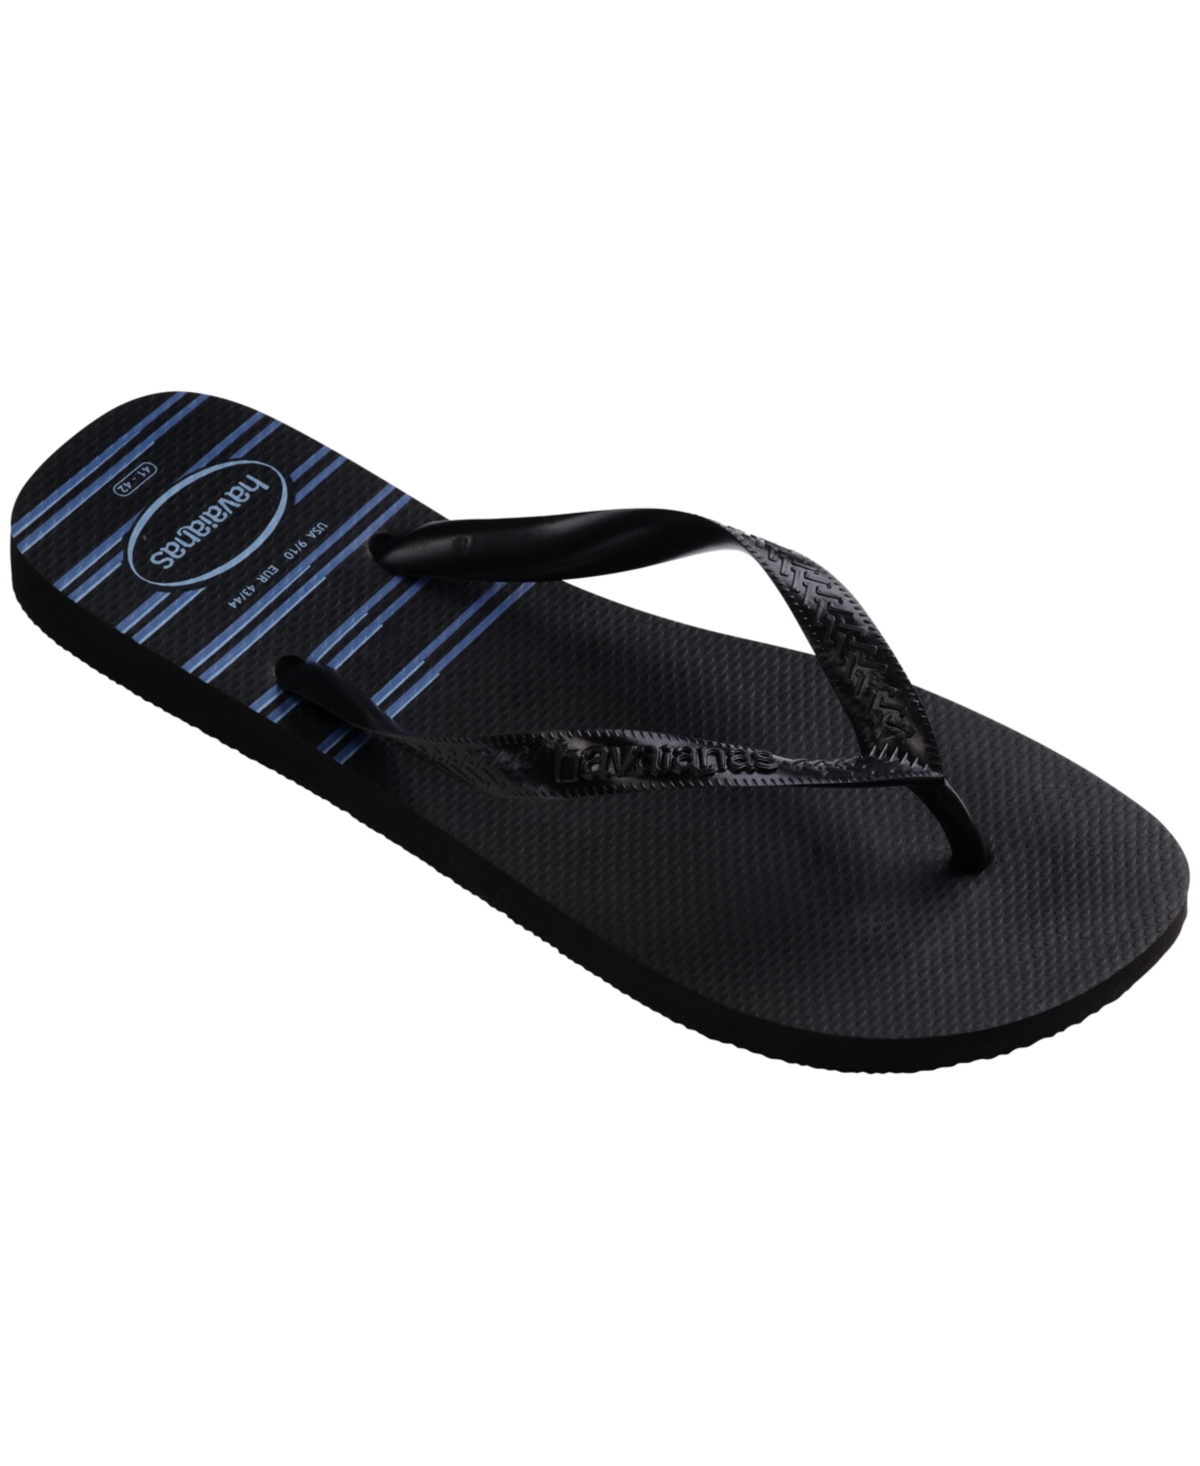 Men's Top Basic Sandals - Black, Blue